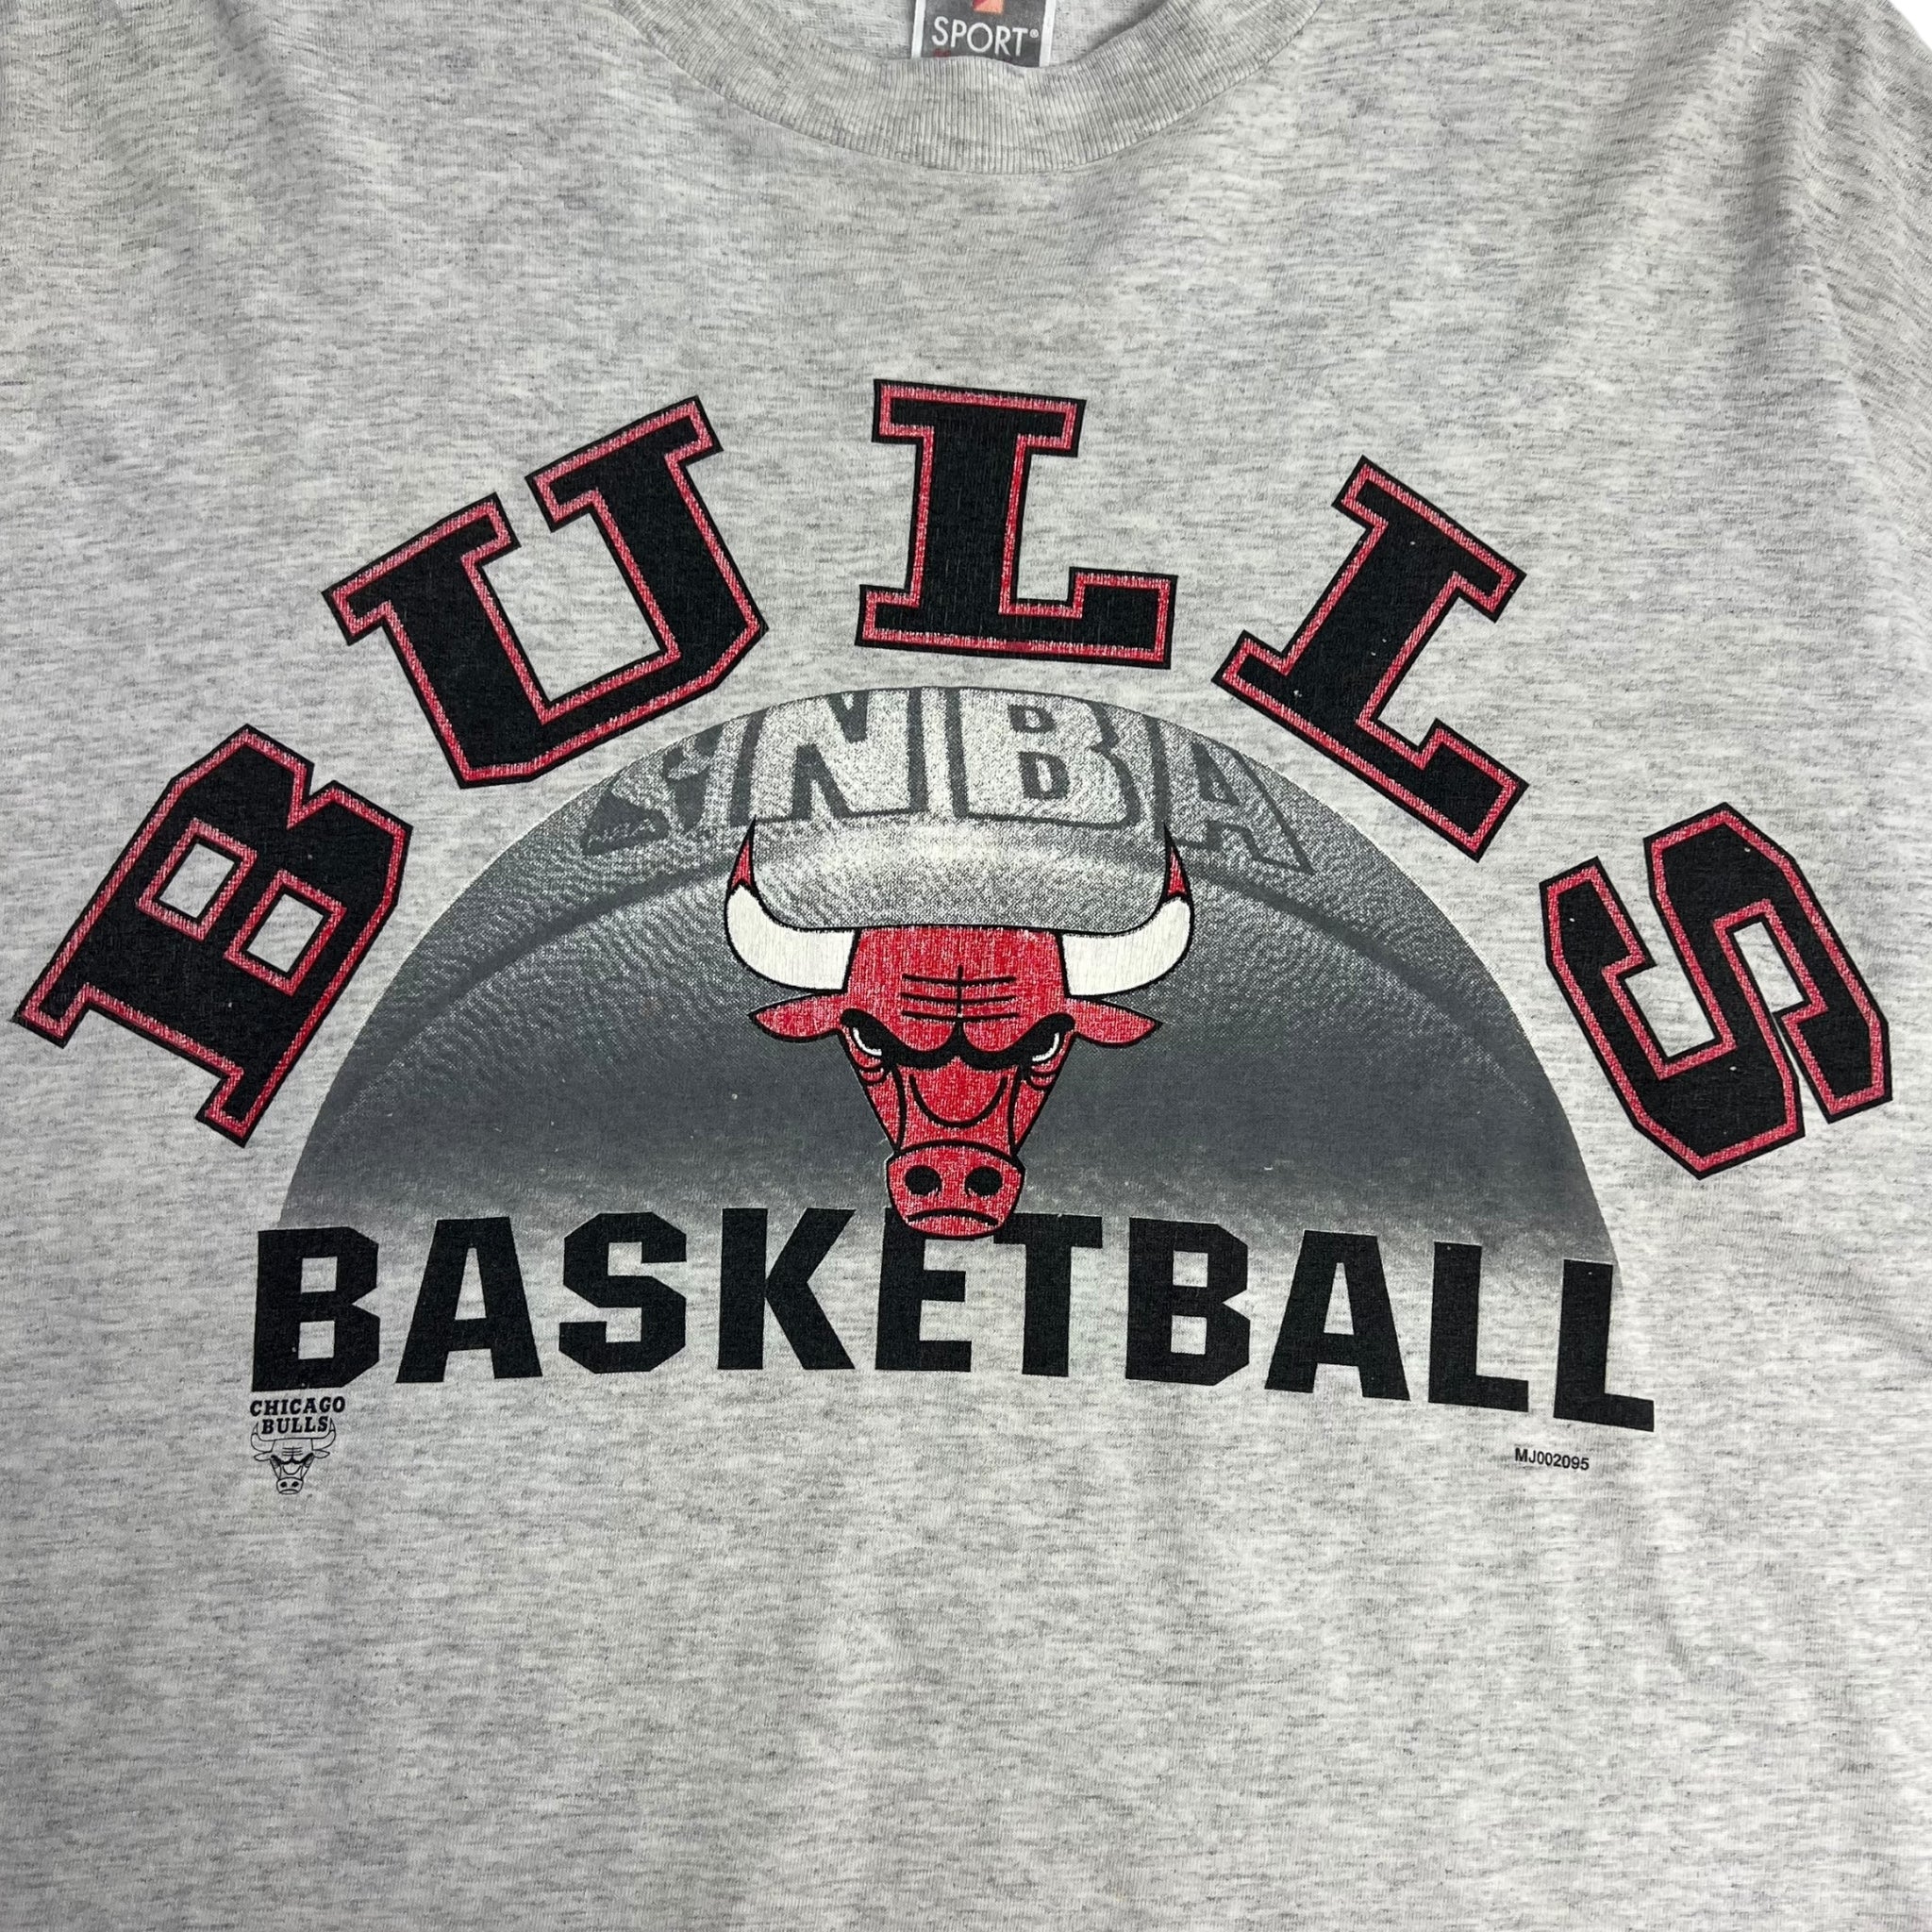 1995 Chicago Bulls Basketball Tee Grey